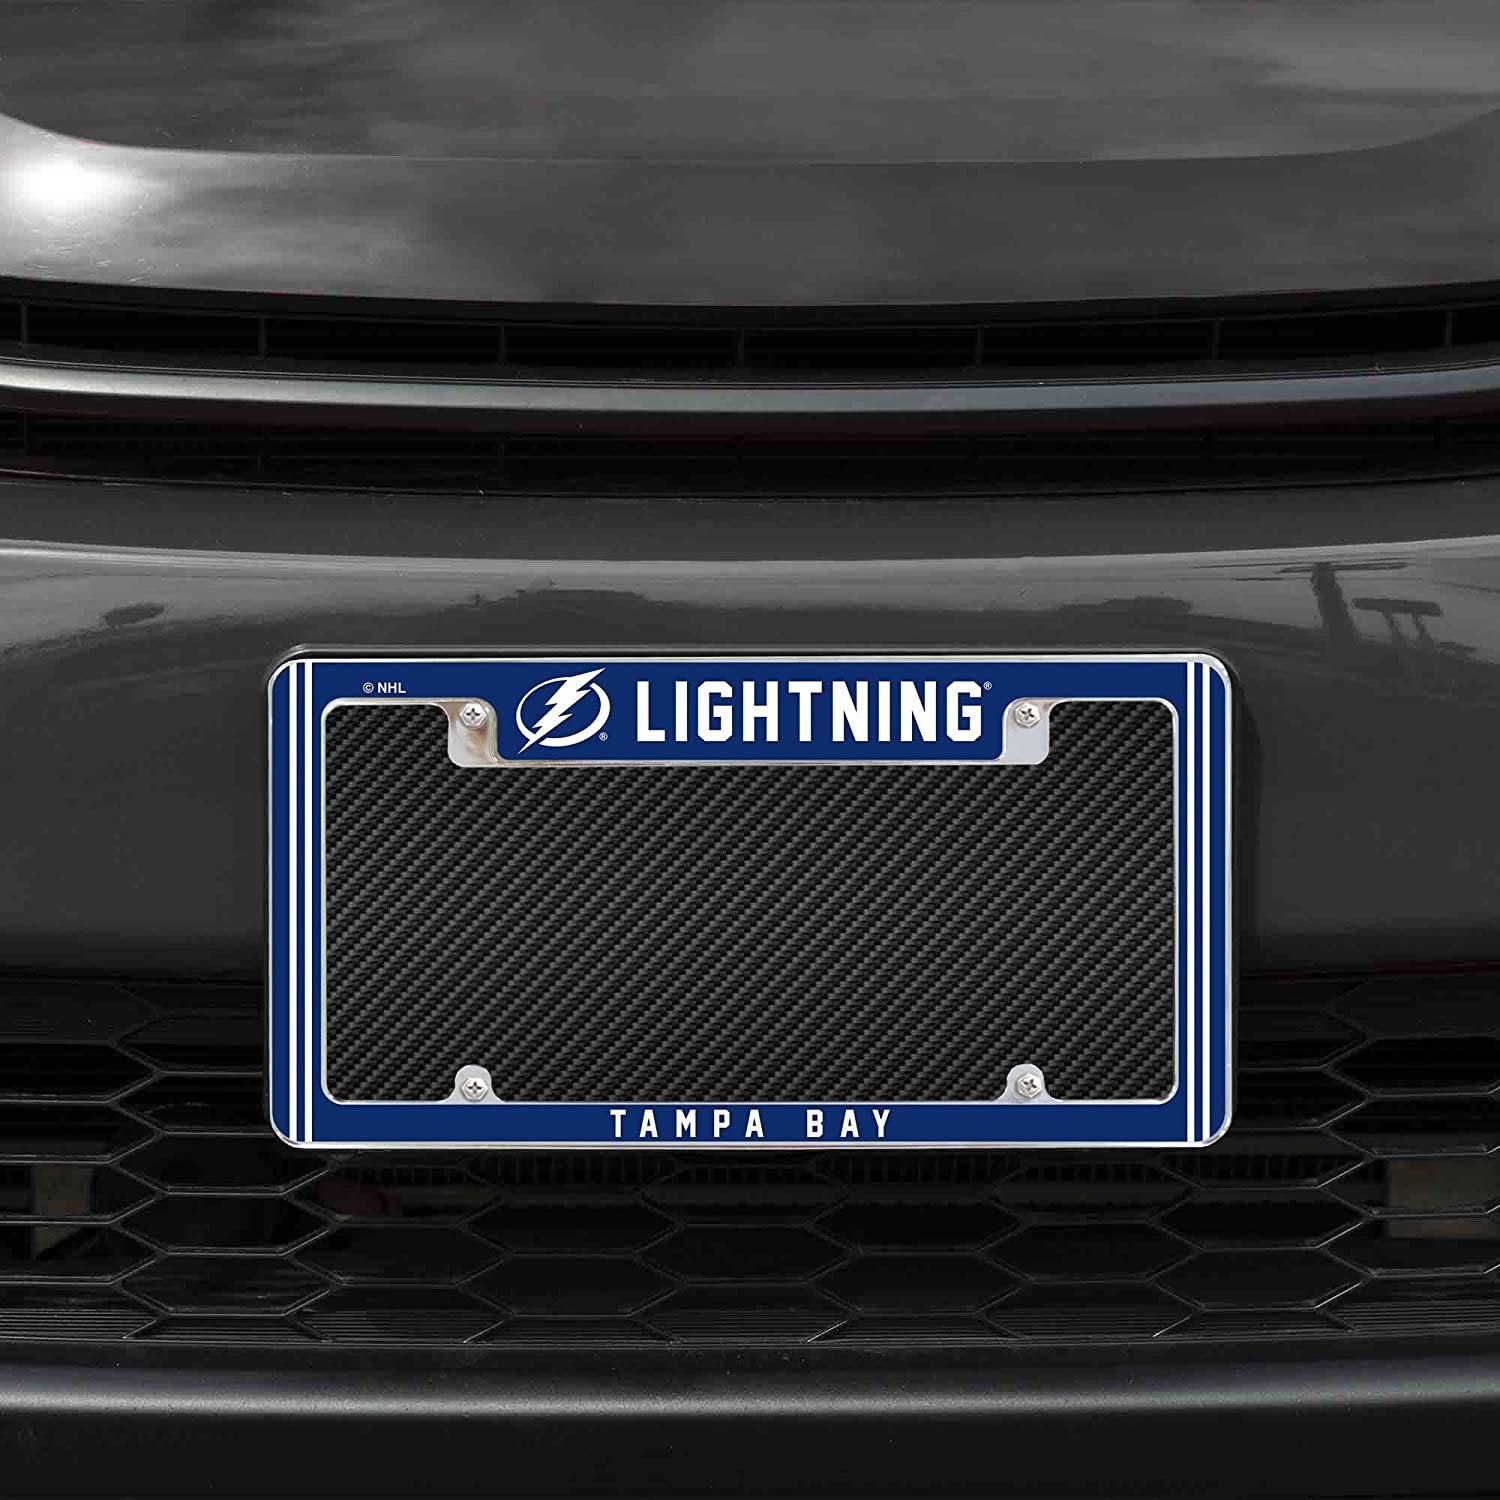 Tampa Bay Lightning Metal License Plate Frame Chrome Tag Cover Alternate Design 6x12 Inch